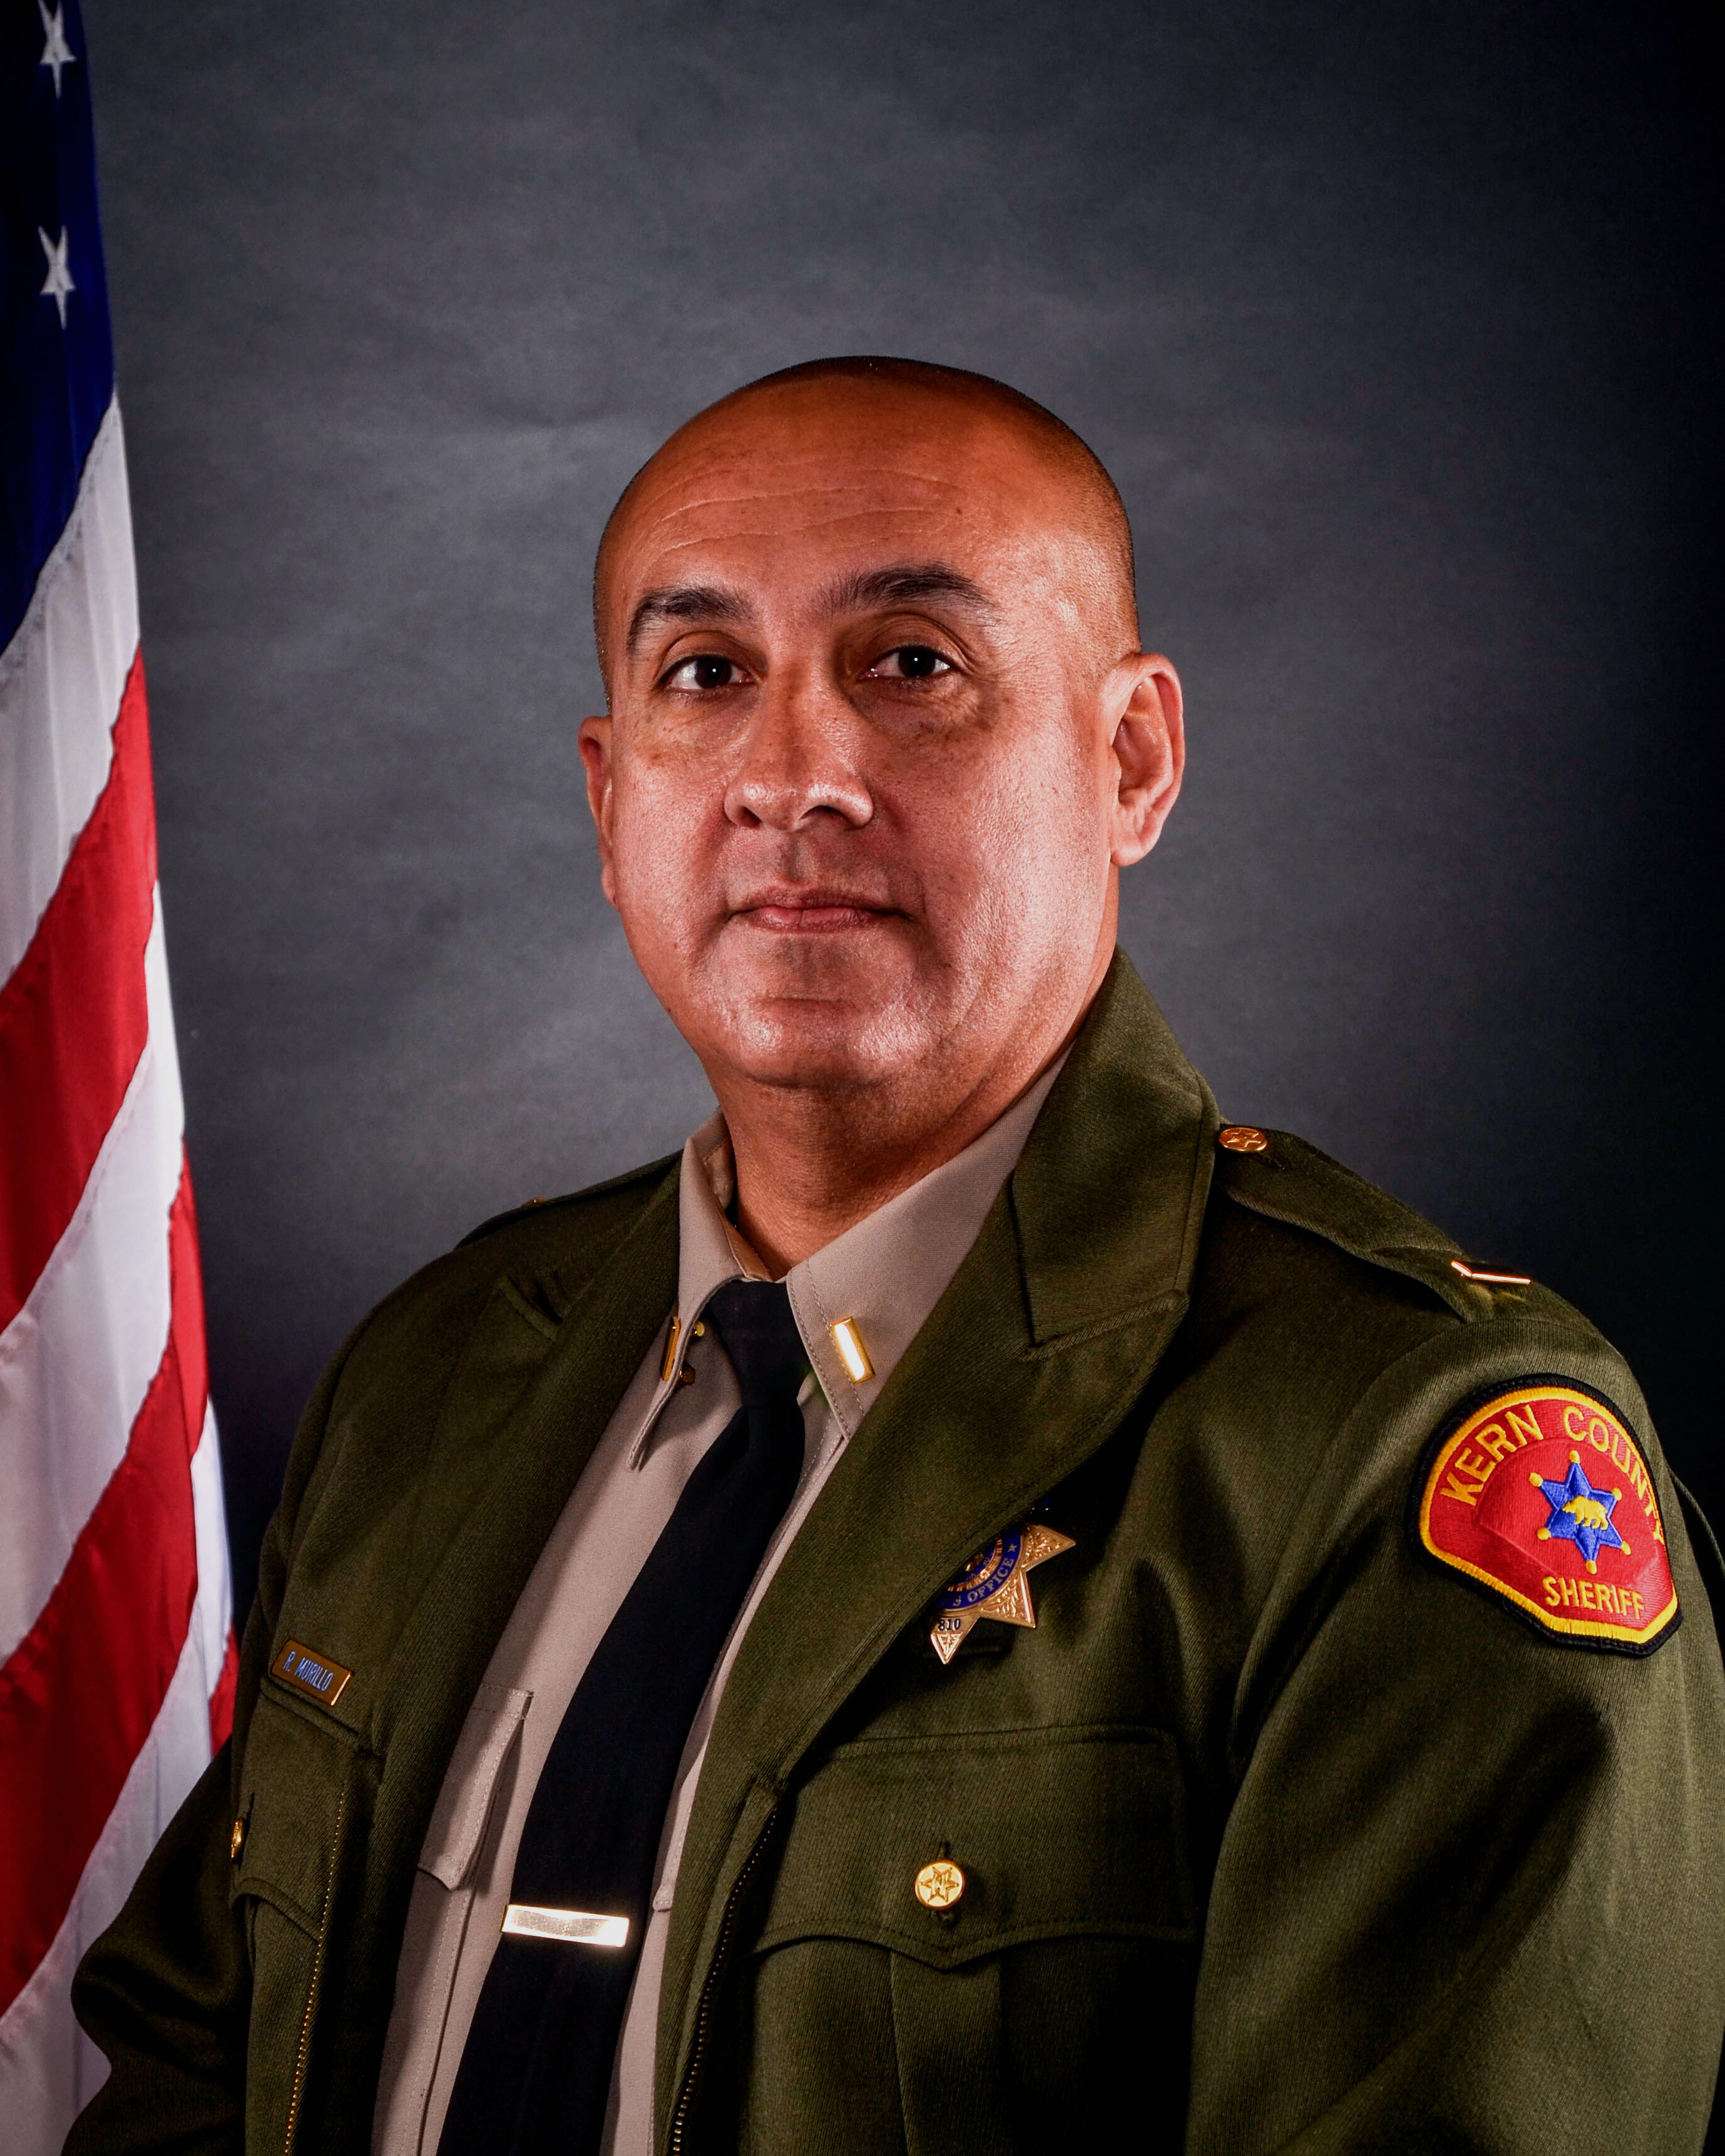 Commander Raul Murillo